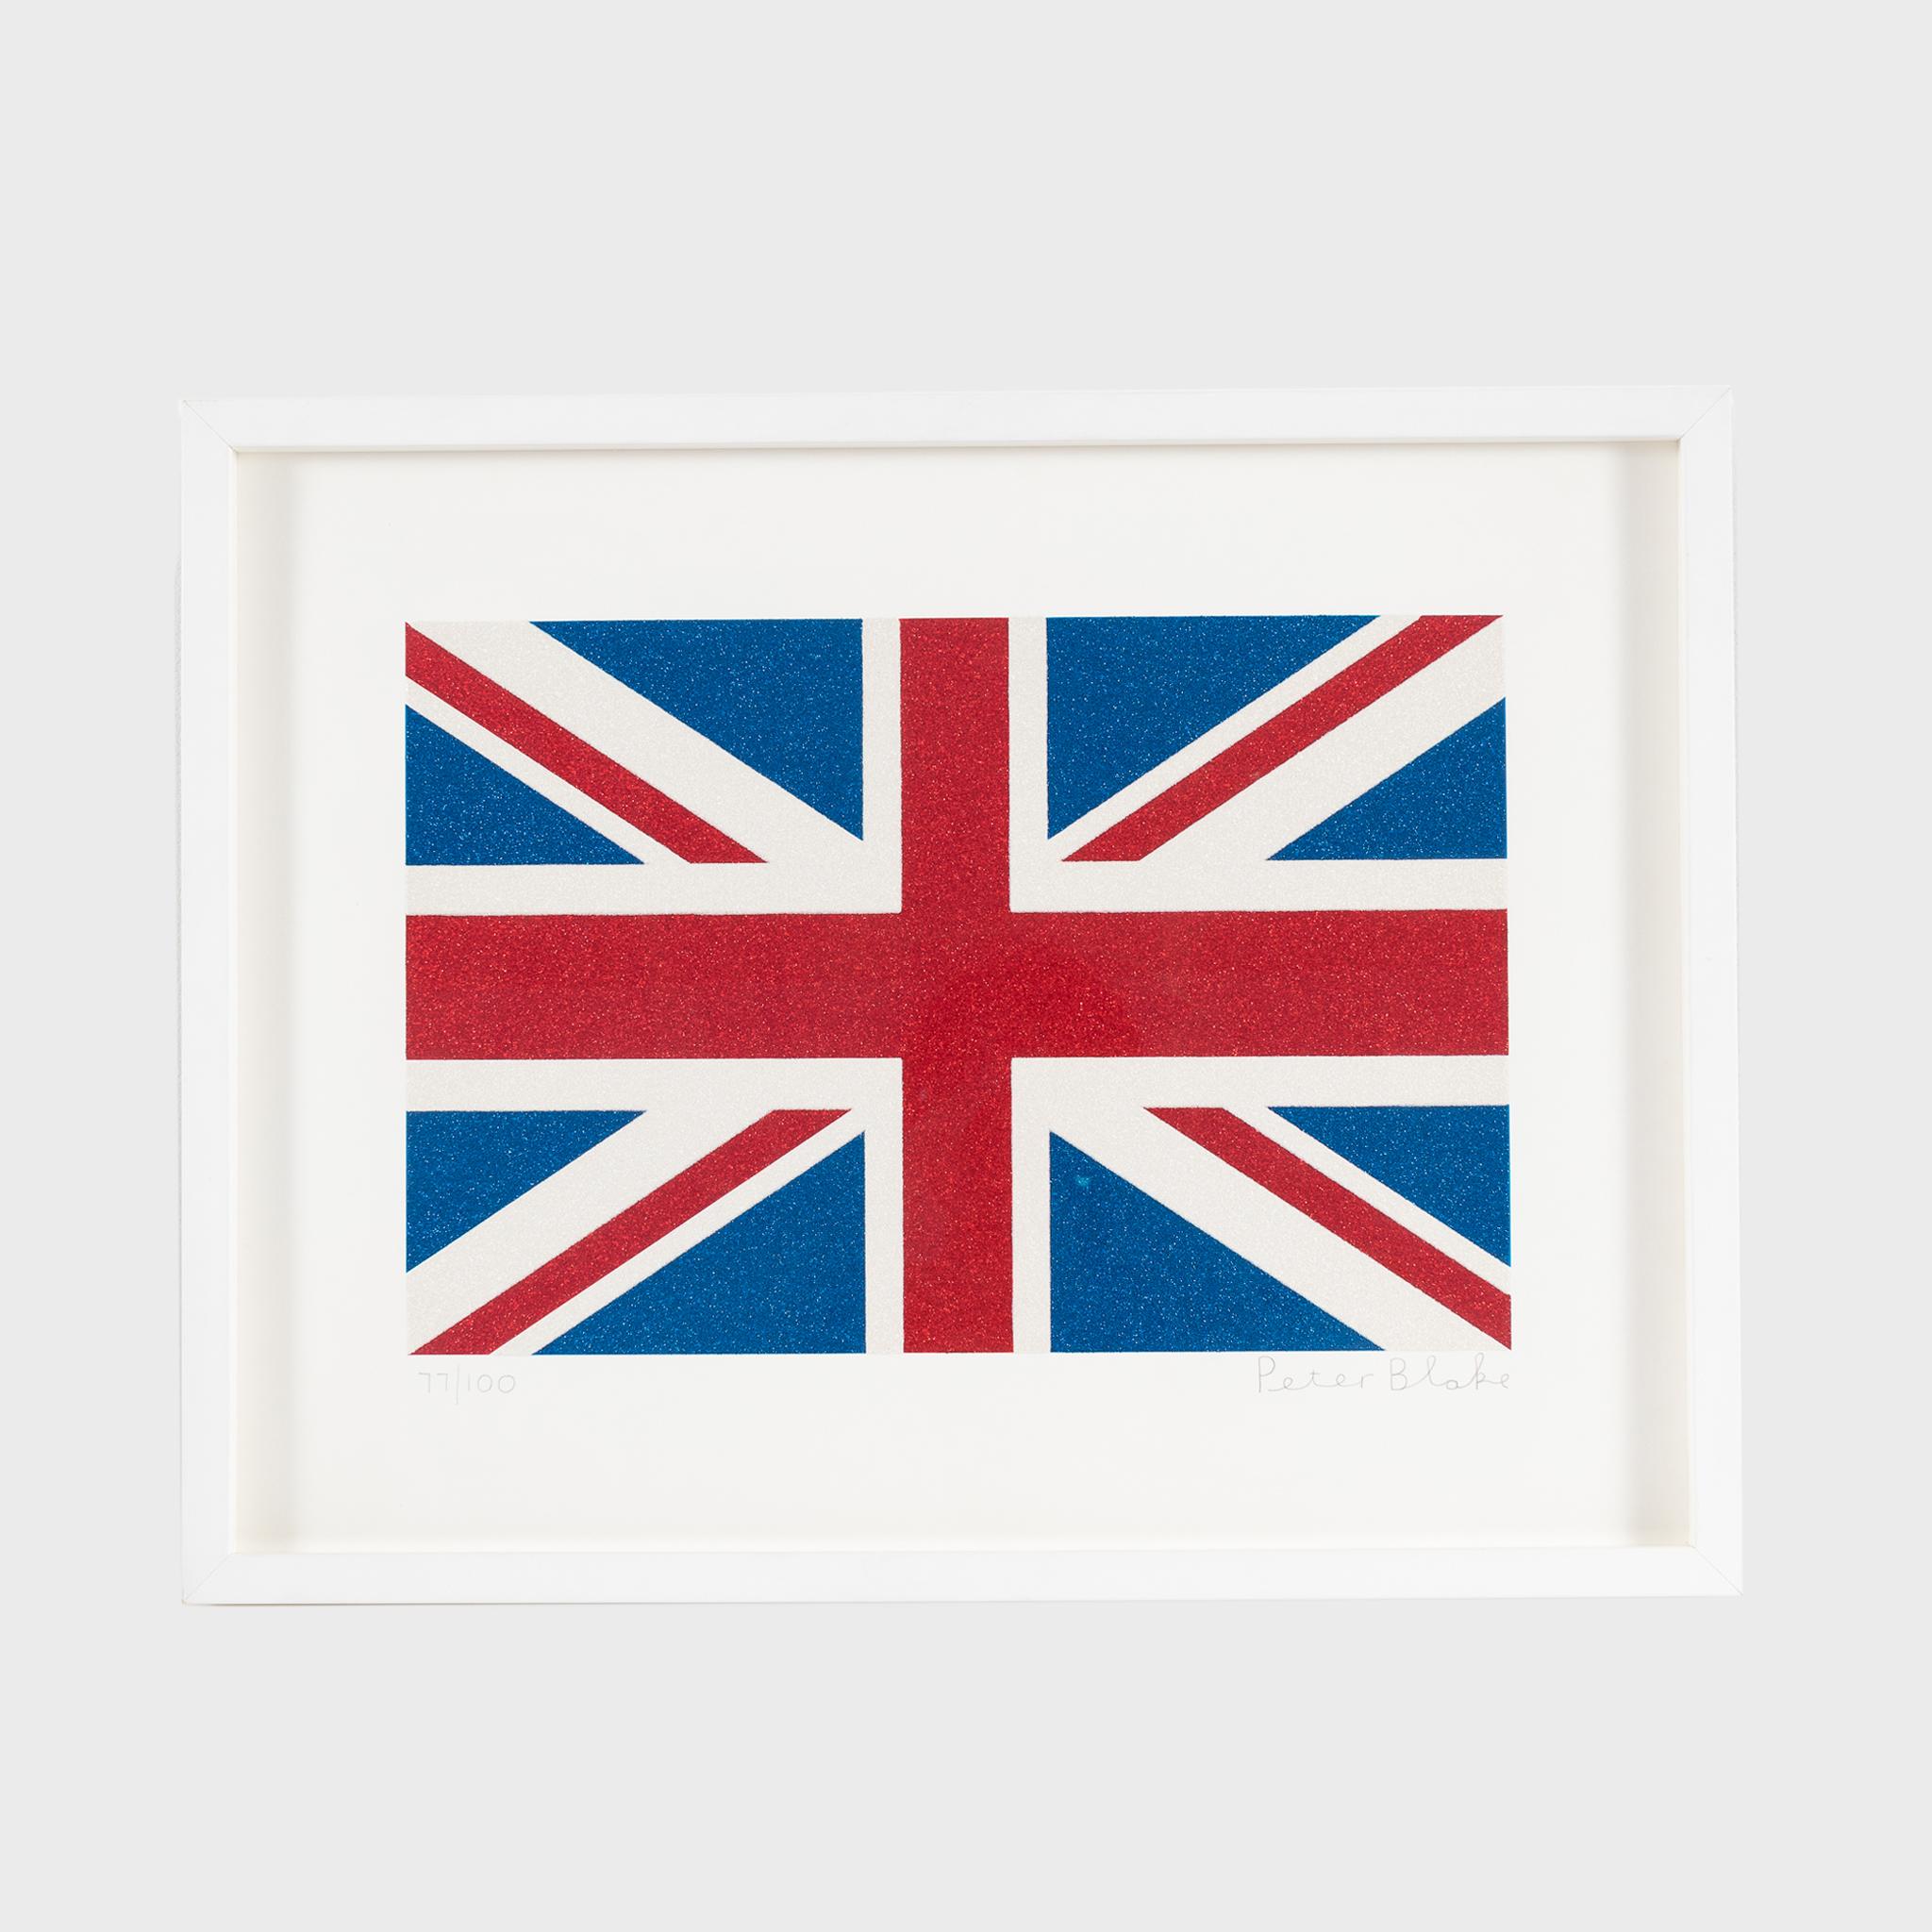 Peter Blake Figurative Print - Small Union Flag